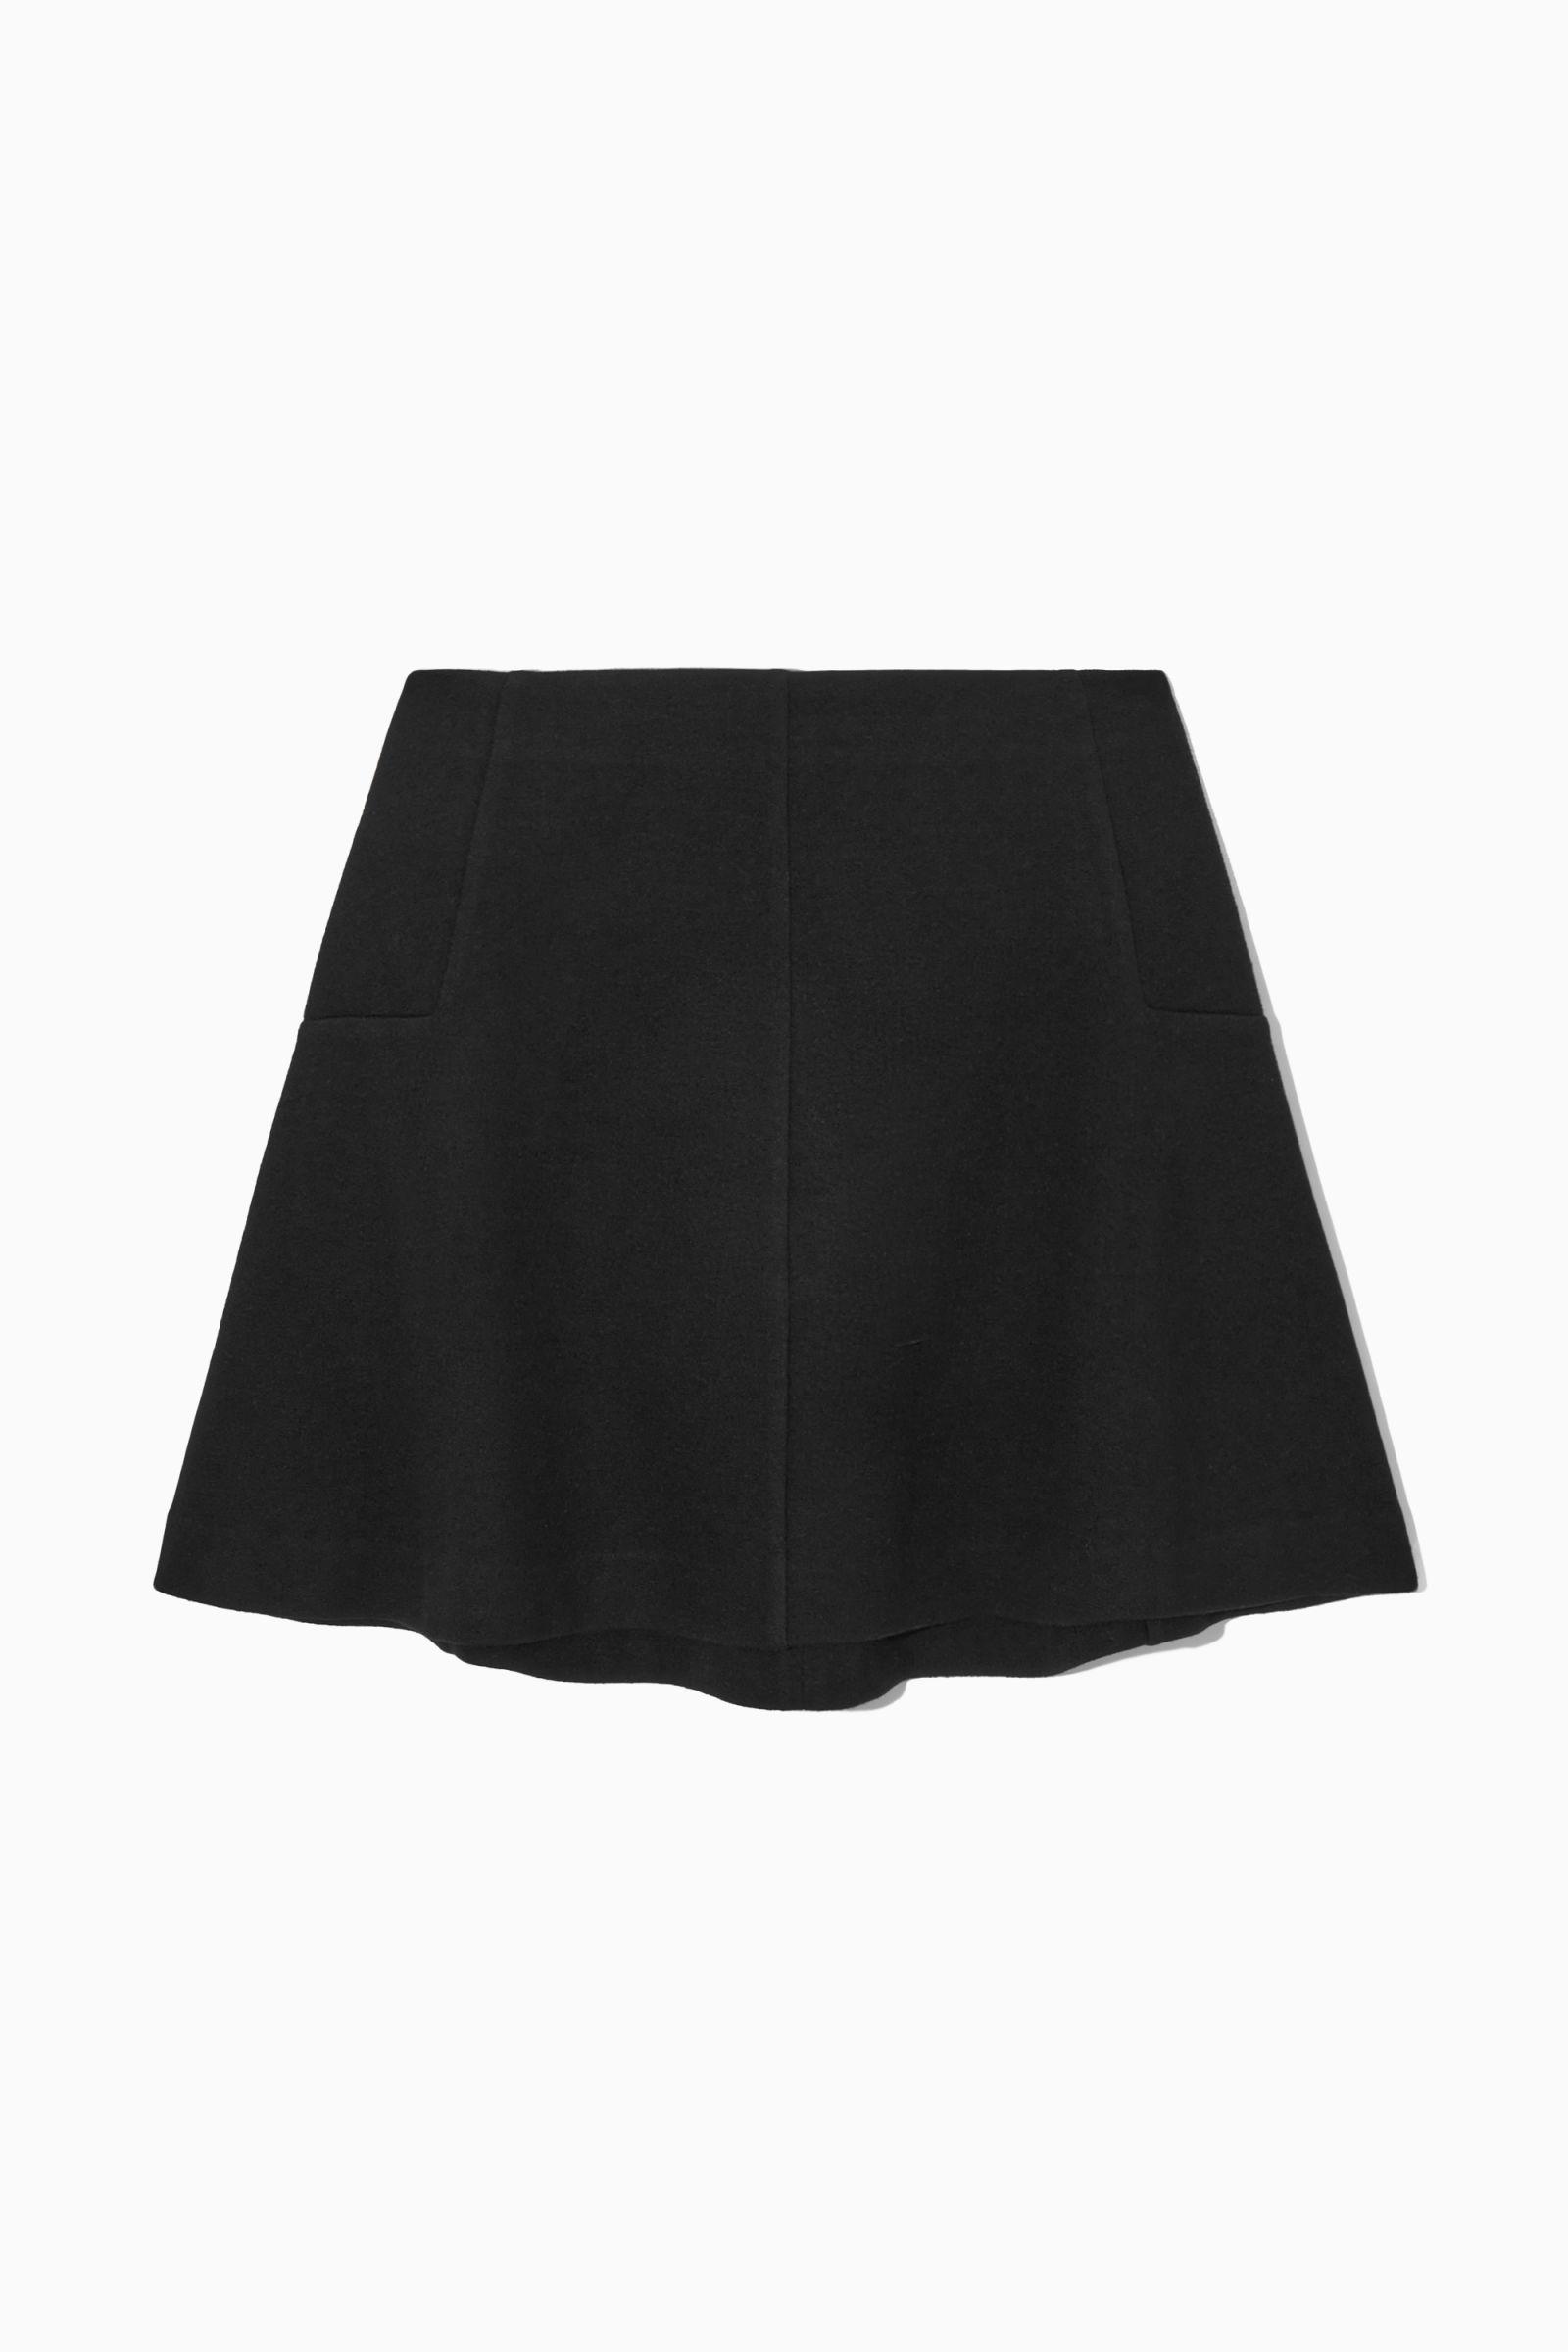 COS Boiled-wool Mini Skirt in Black | Lyst UK